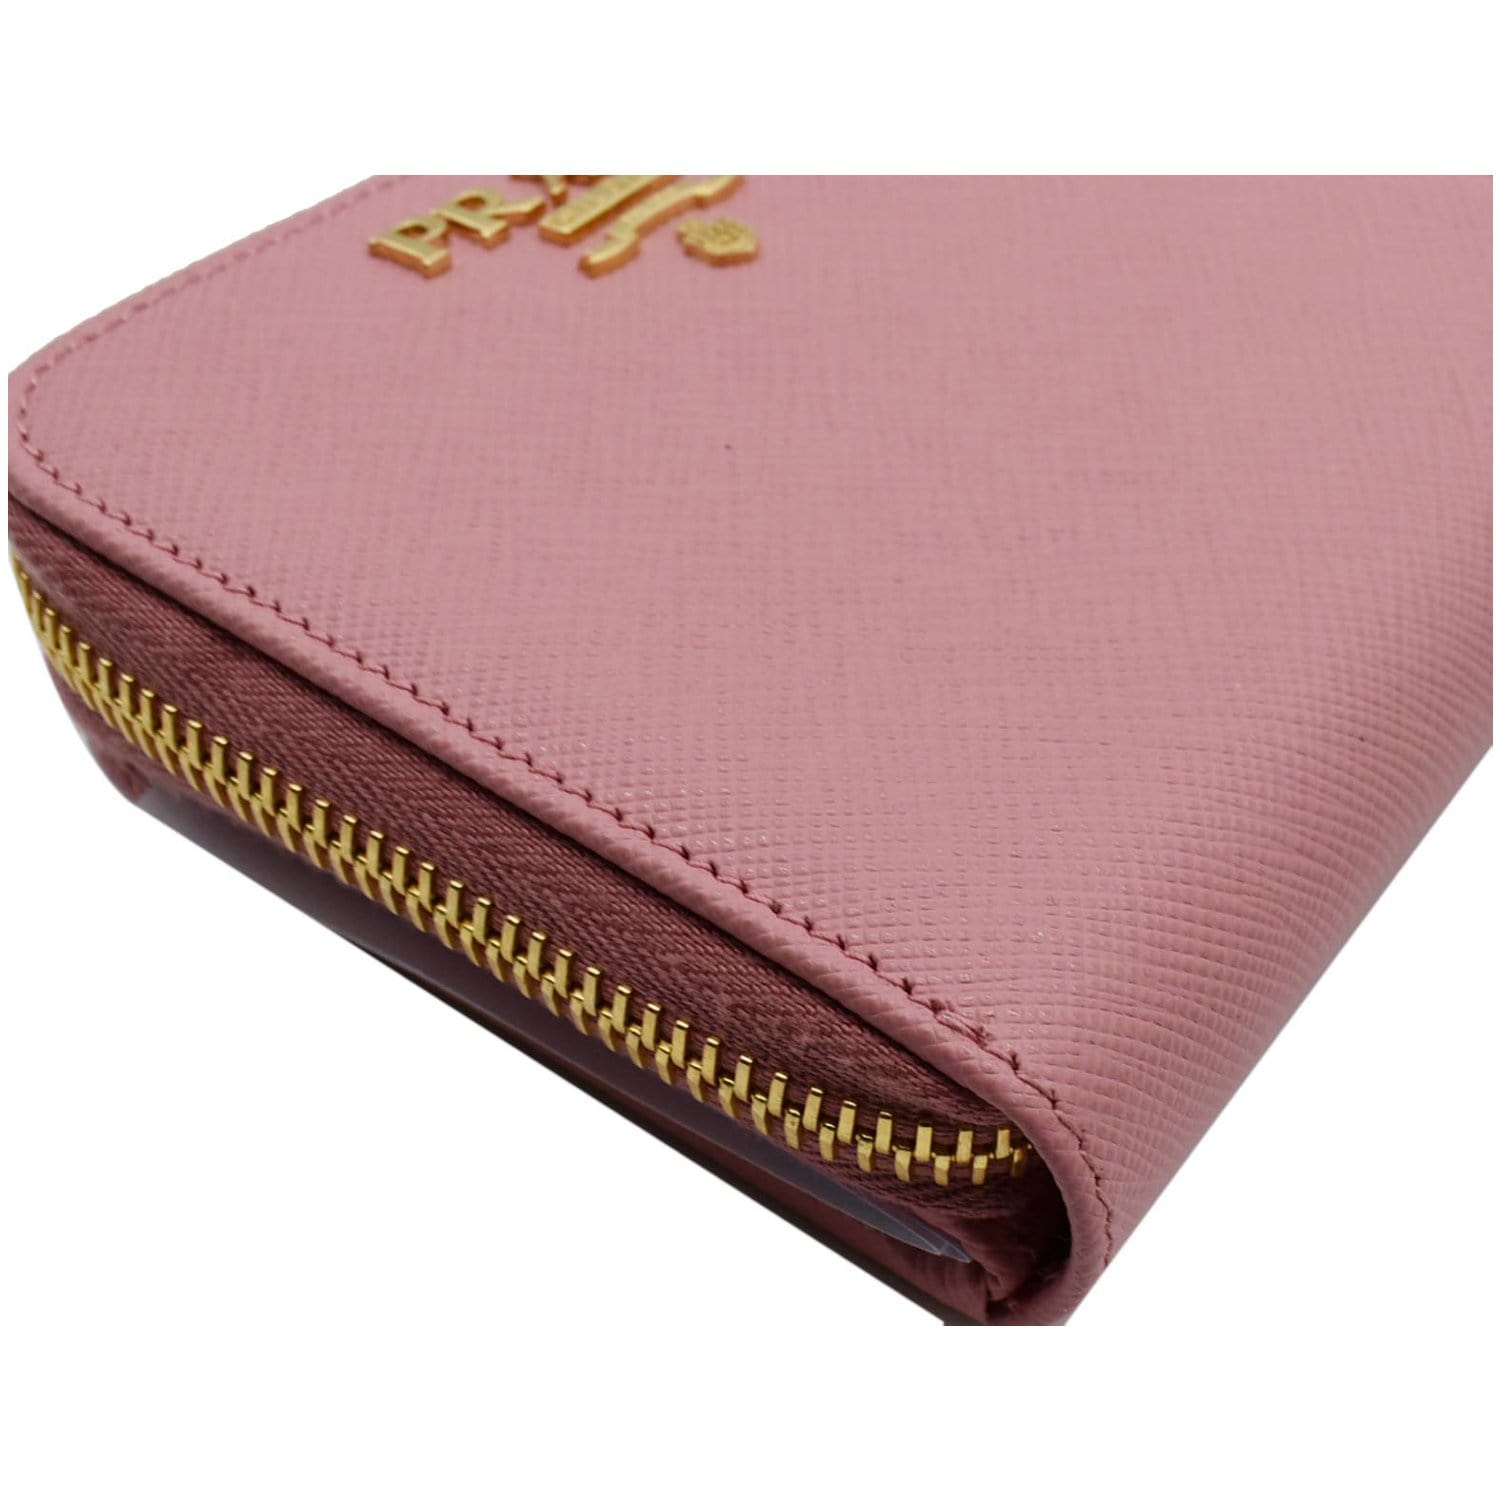 Prada Women's Small Saffiano Leather Wallet